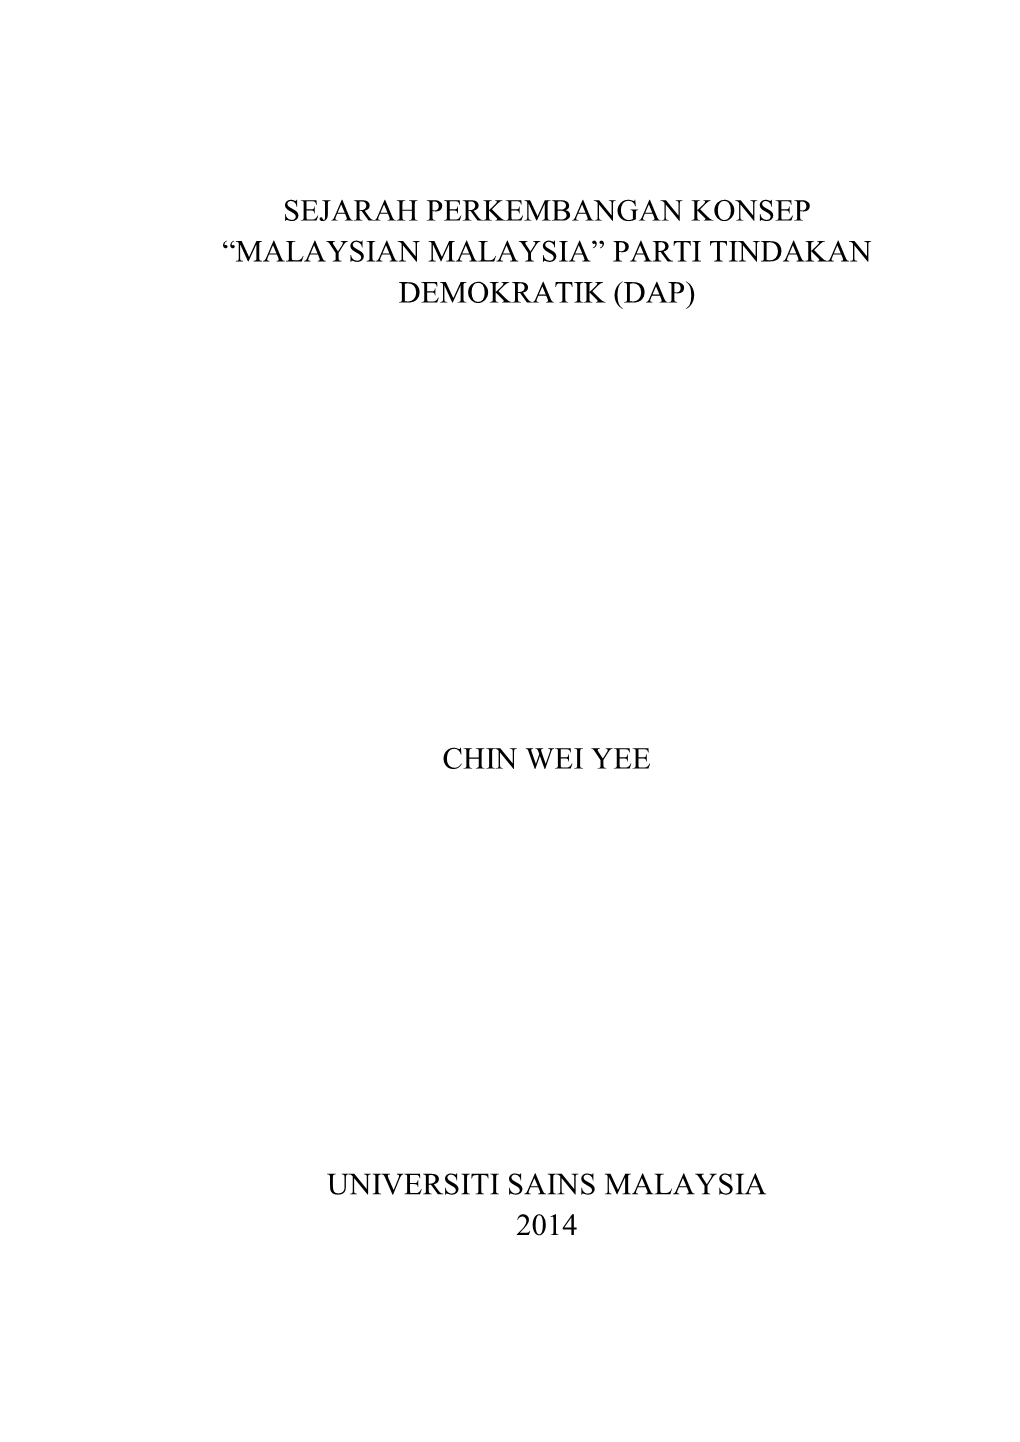 Sejarah Perkembangan Konsep “Malaysian Malaysia” Parti Tindakan Demokratik (Dap)